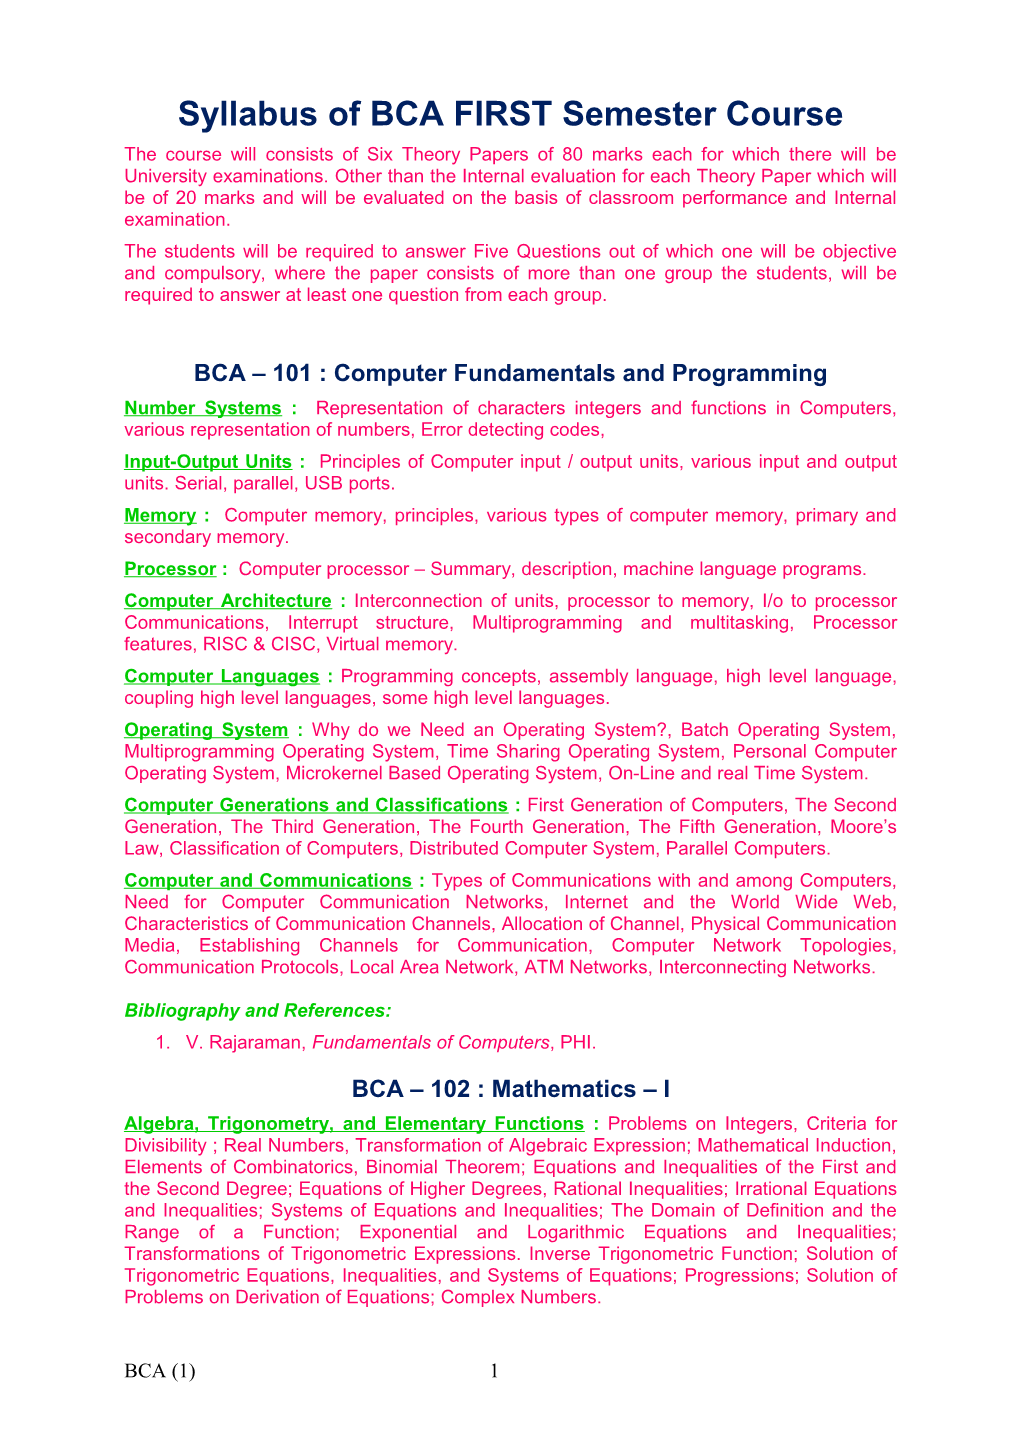 Details Syllabus of BCA Course